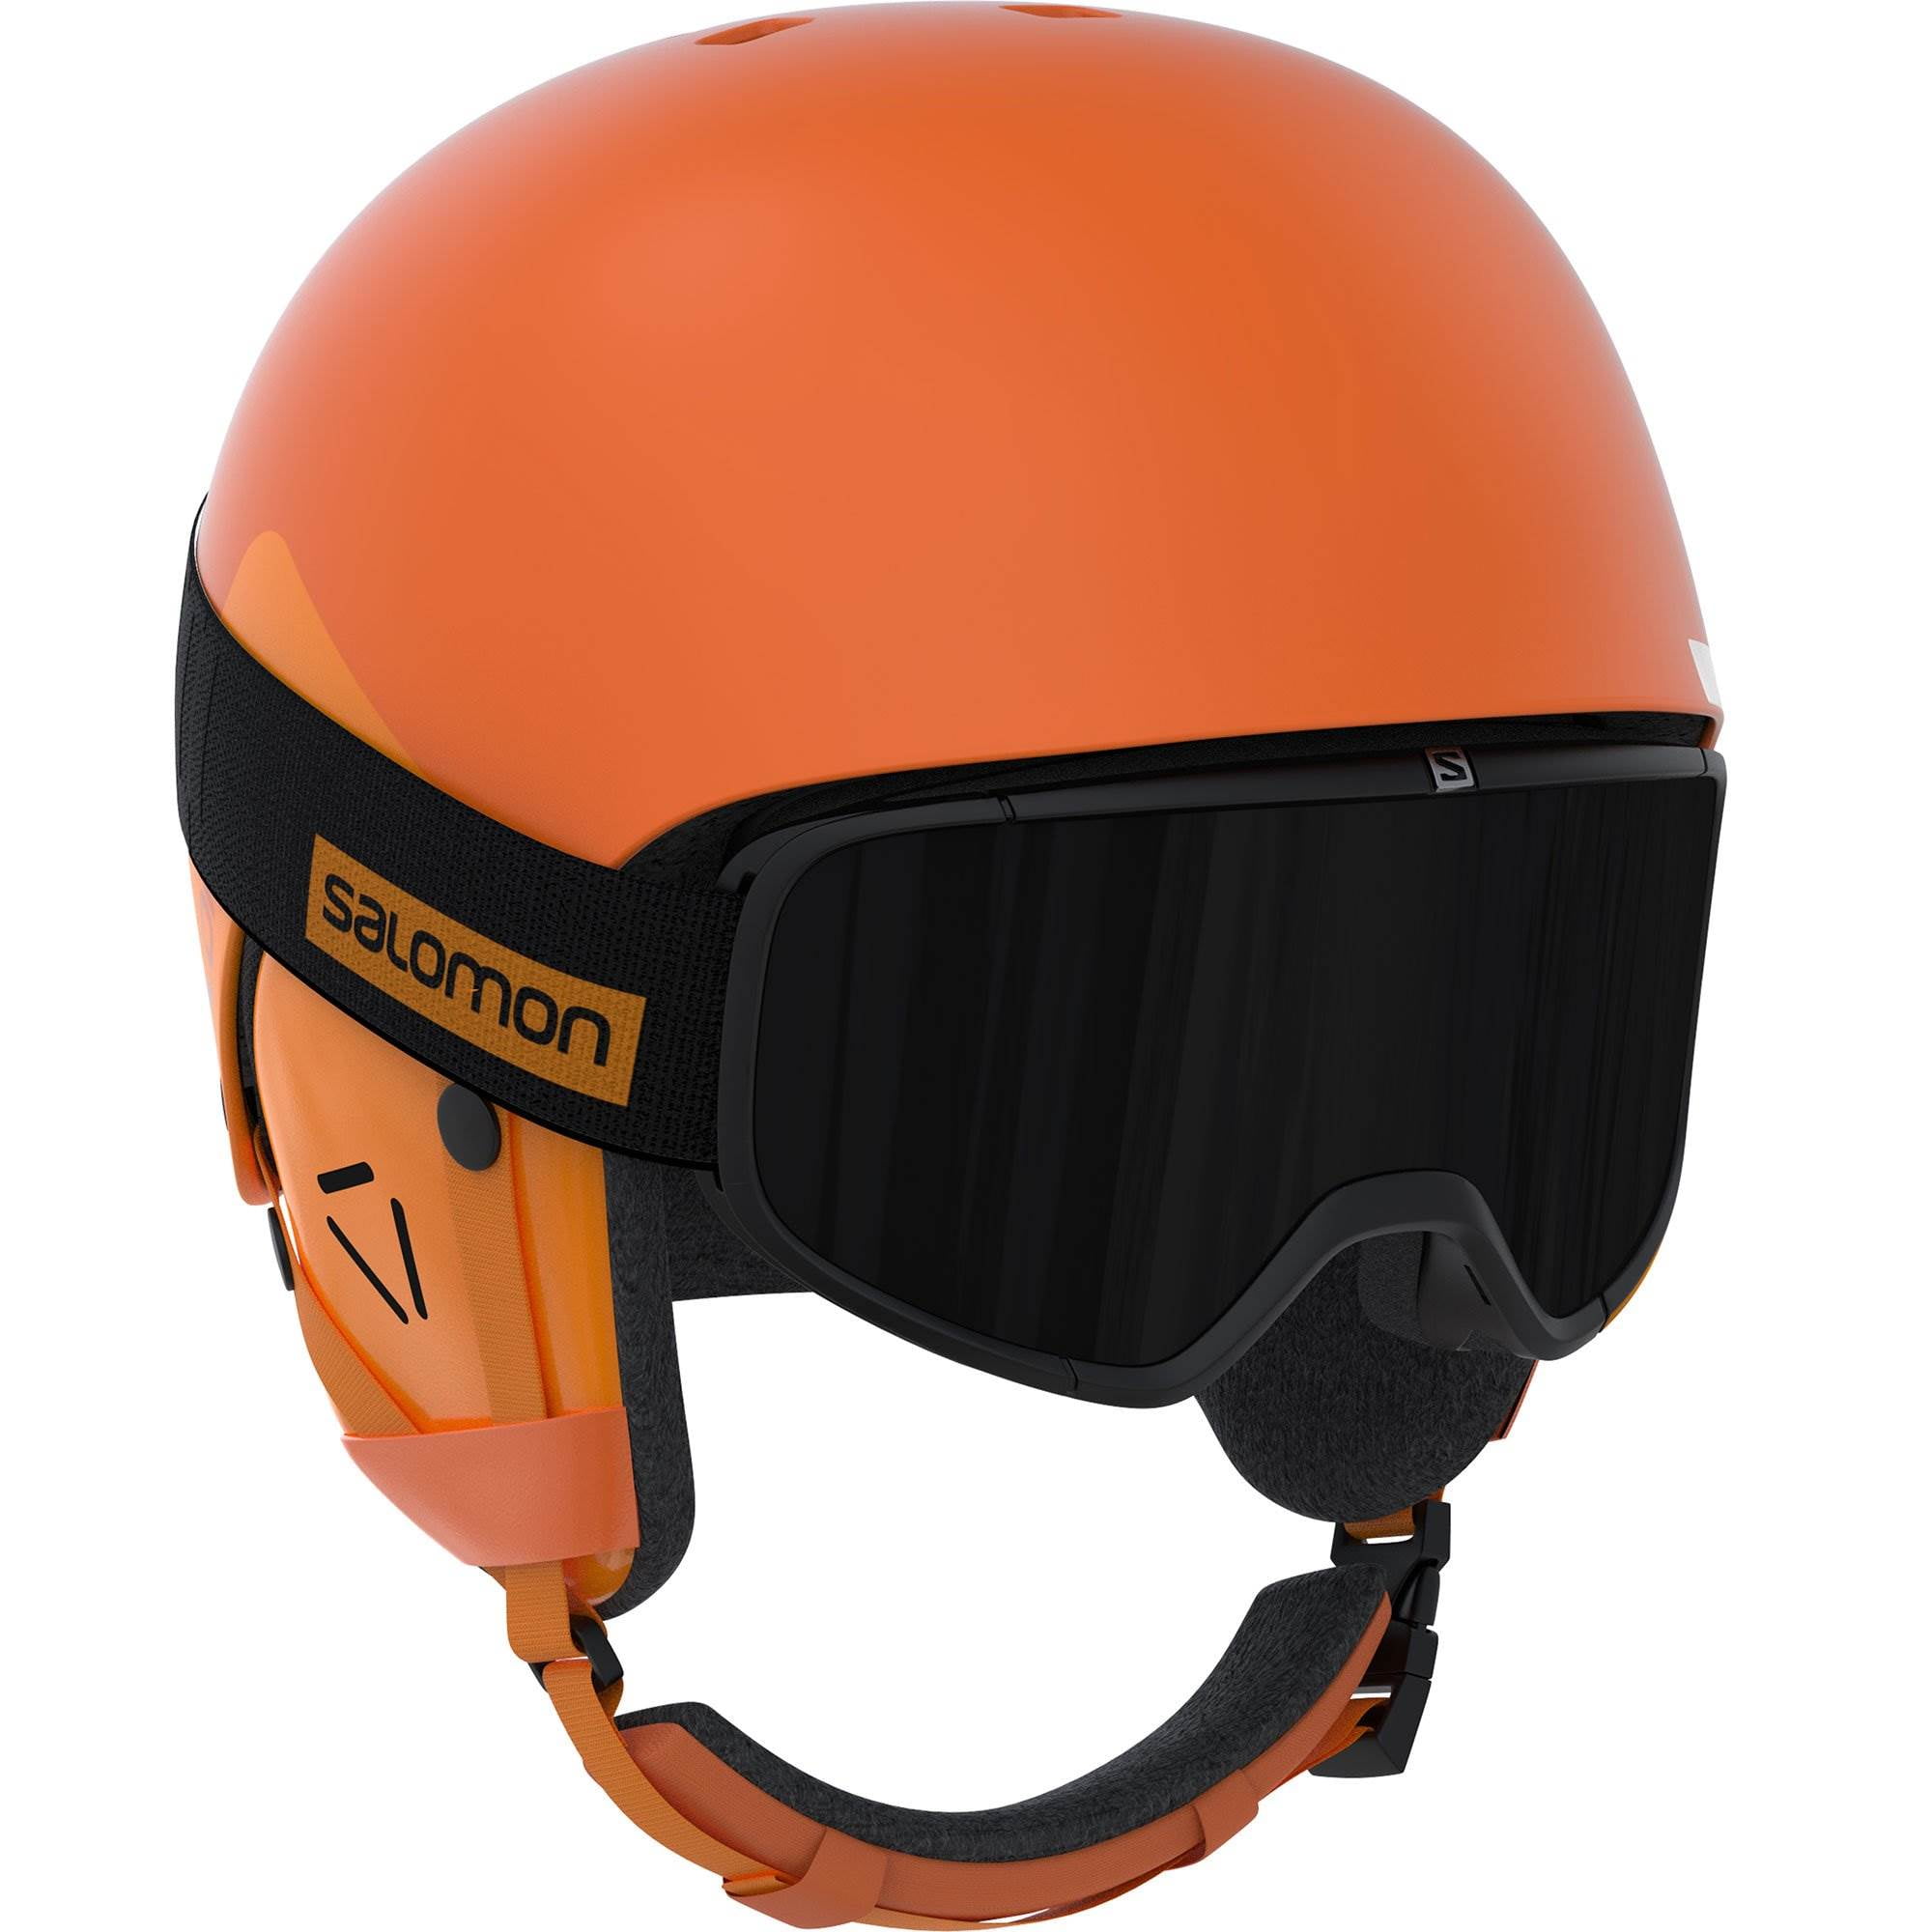 Salomon Mens All Mountain Snowboard Helmet Size Medium, Orange Pack) - Walmart.com